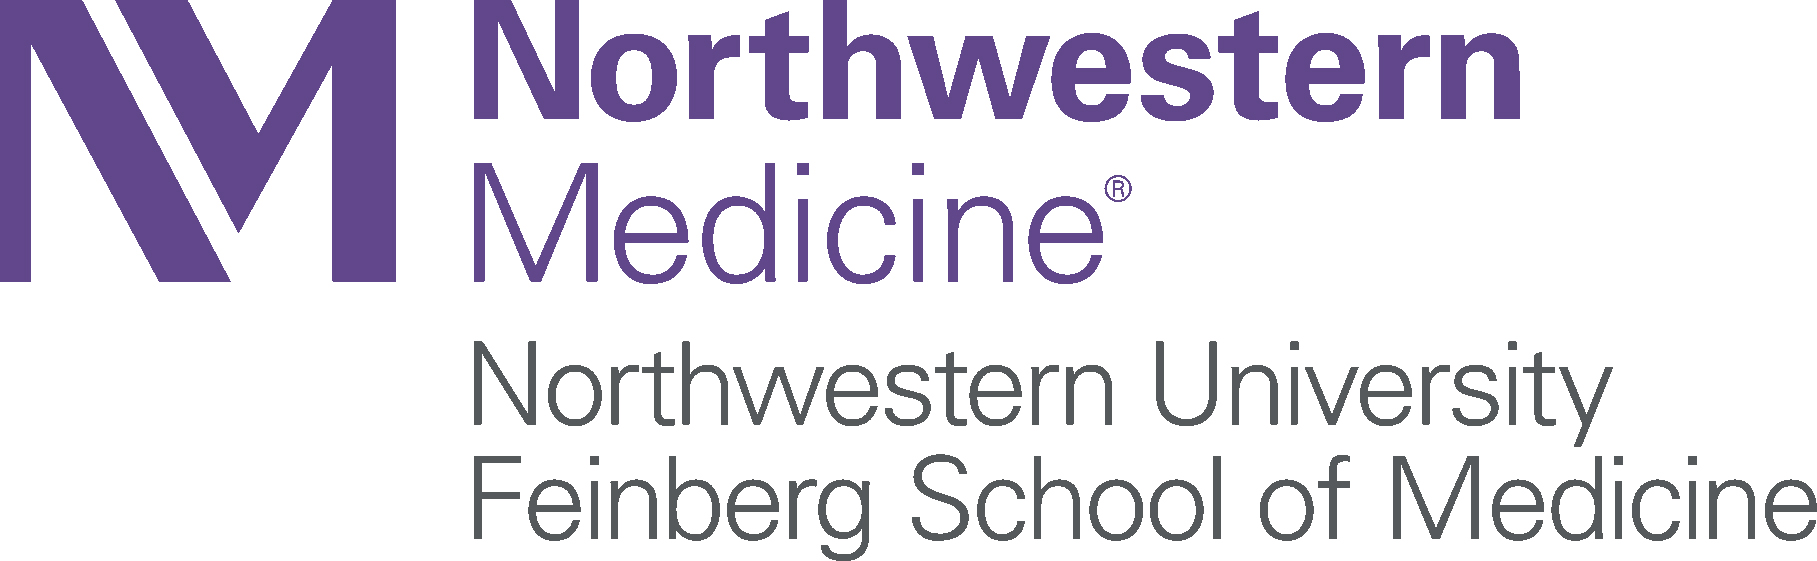 Northwestern Medicine Feinberg School of Medicine